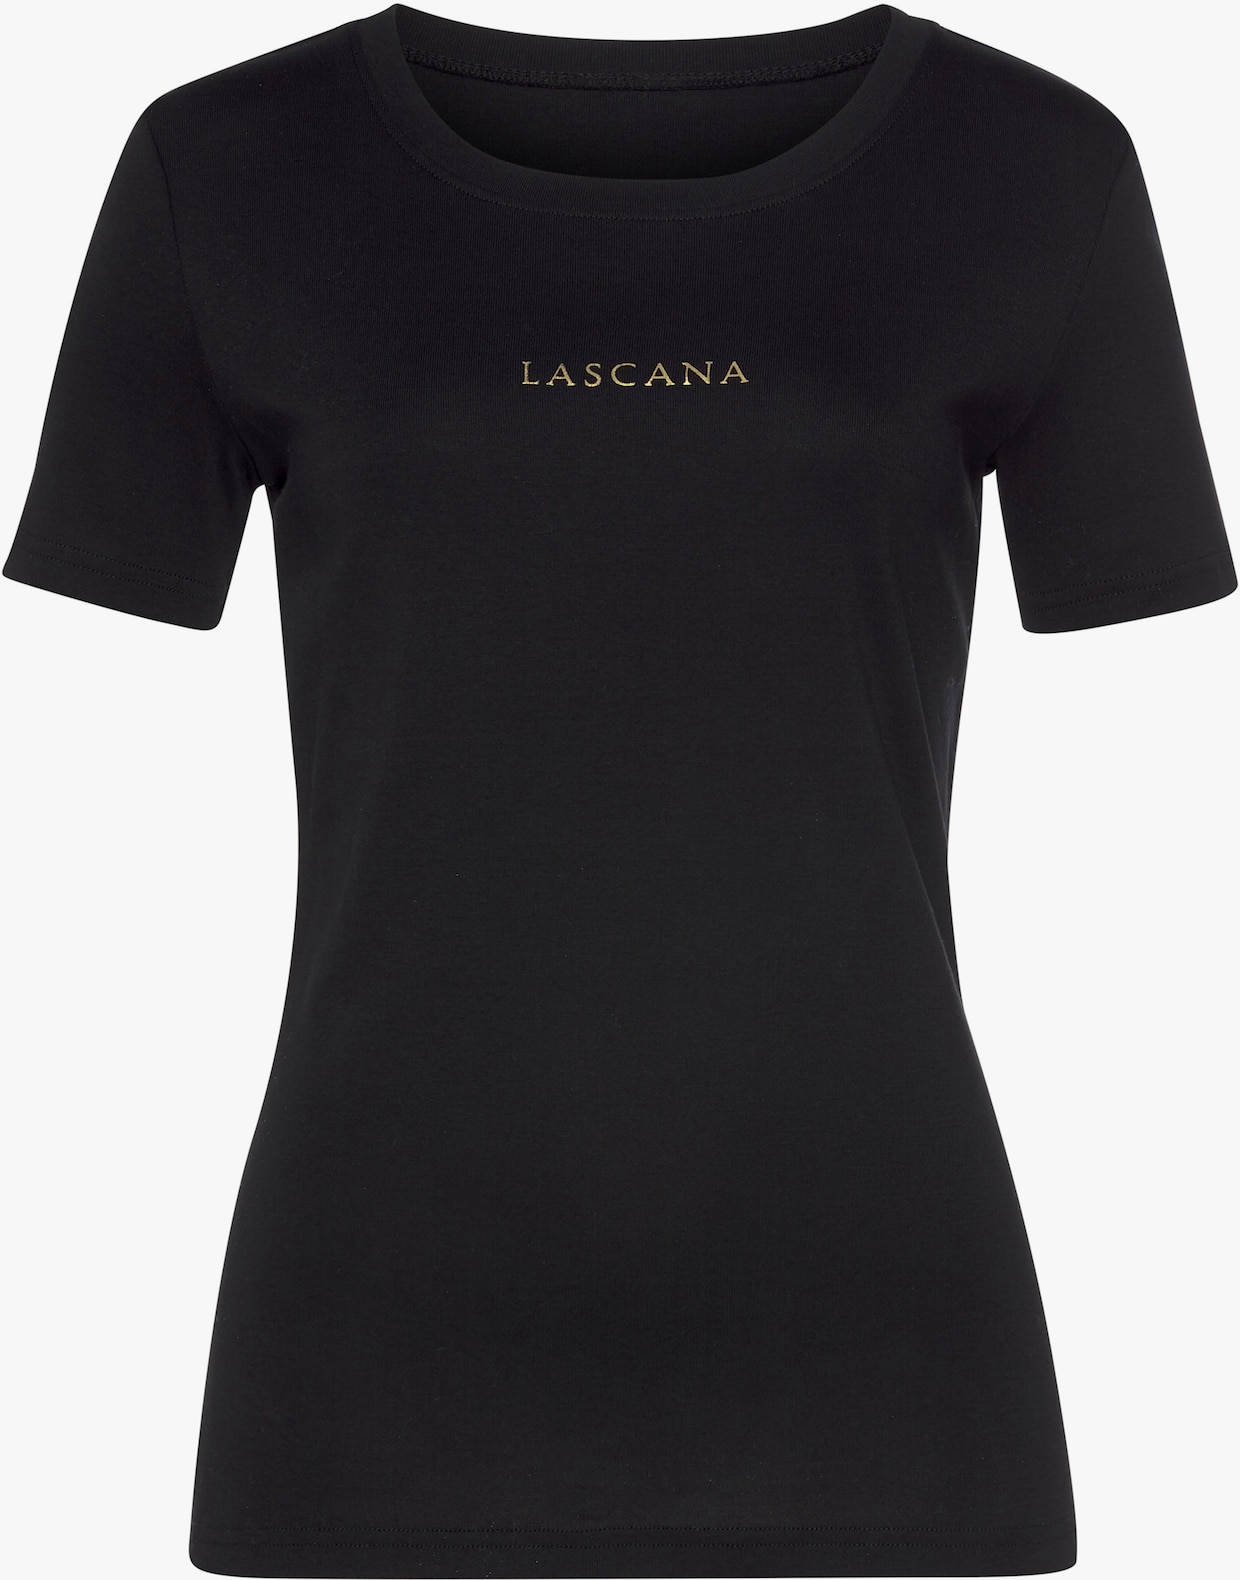 LASCANA T-Shirt - bordeaux, schwarz